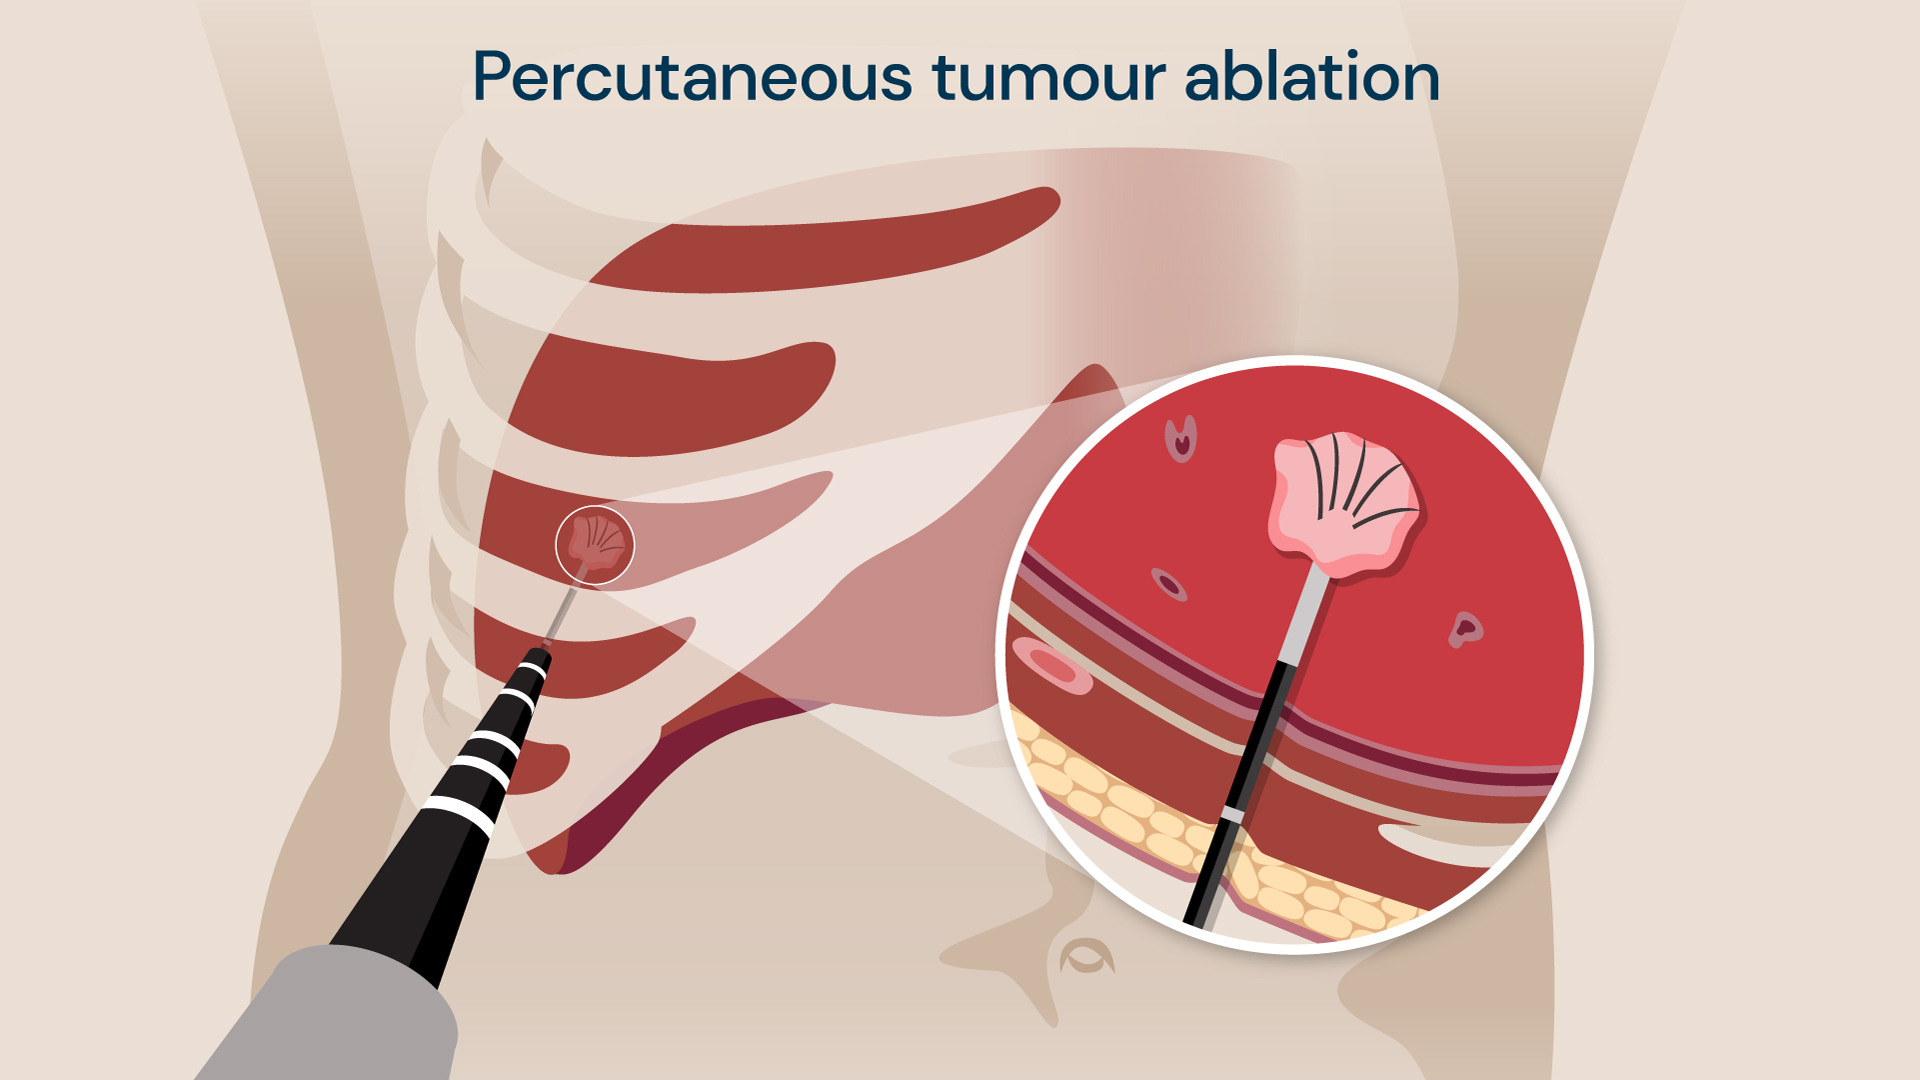 A visual of a percutaneous tumour ablation procedure.